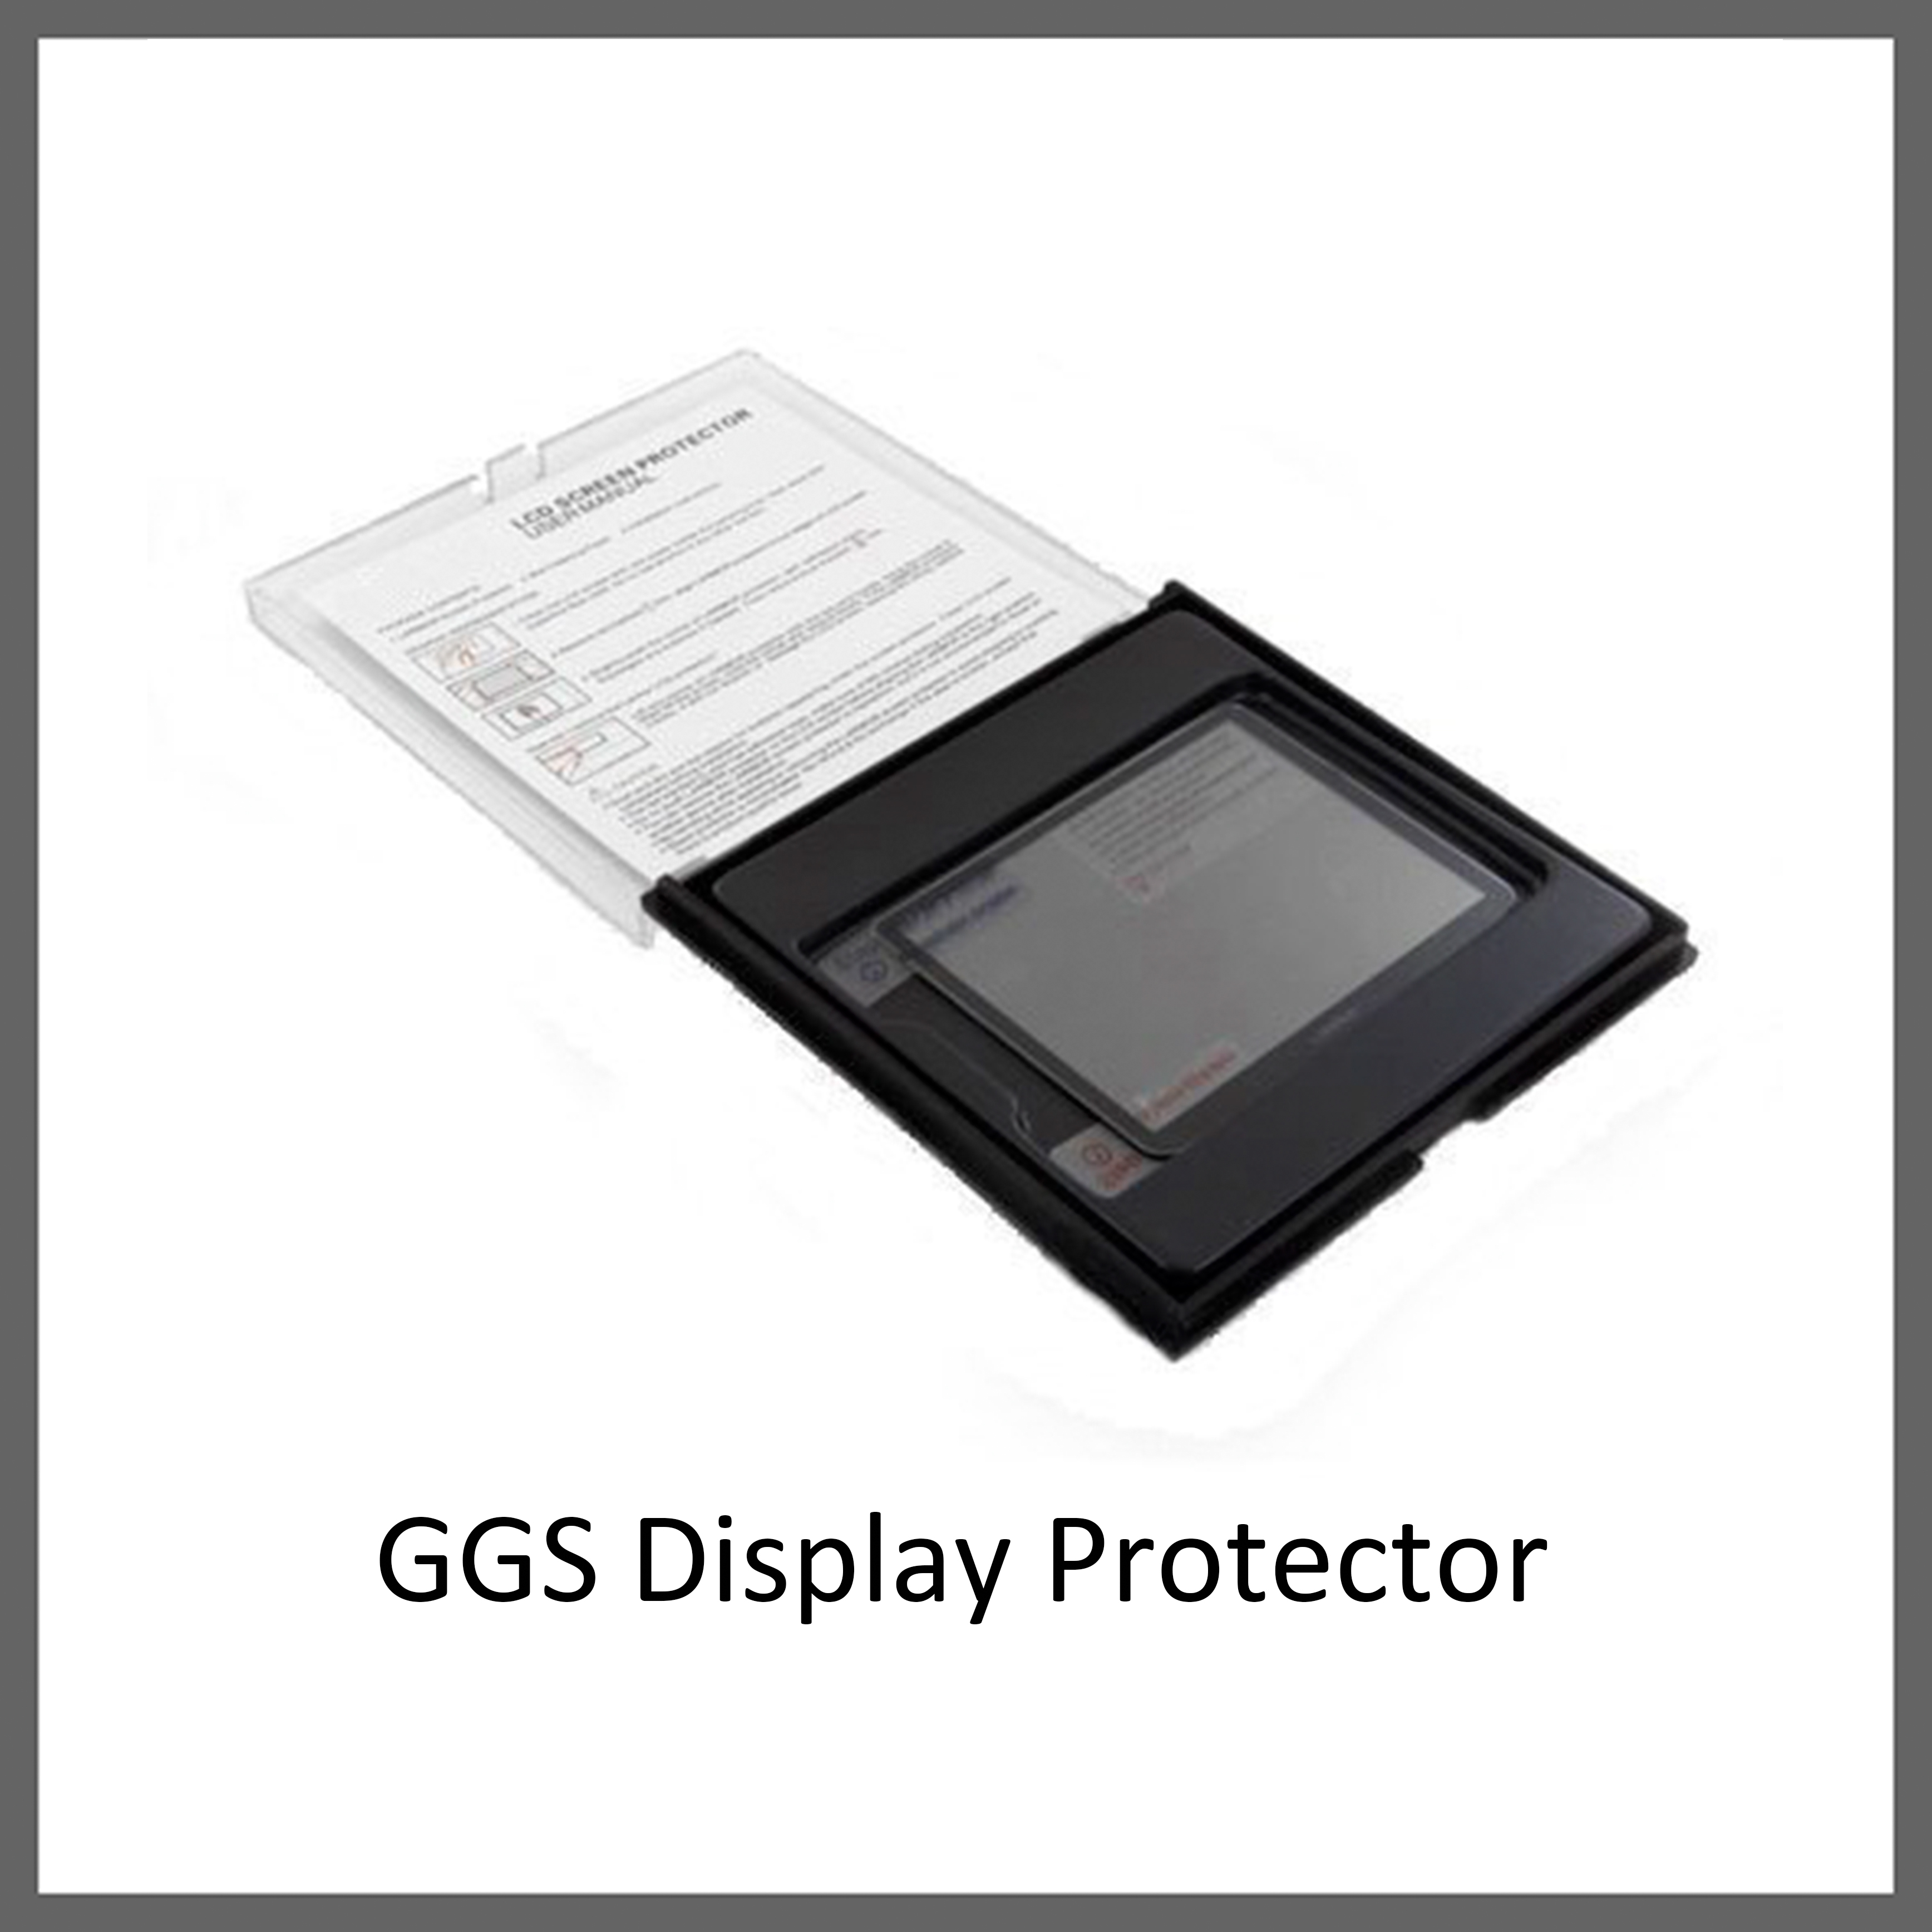 GGS Display Protector